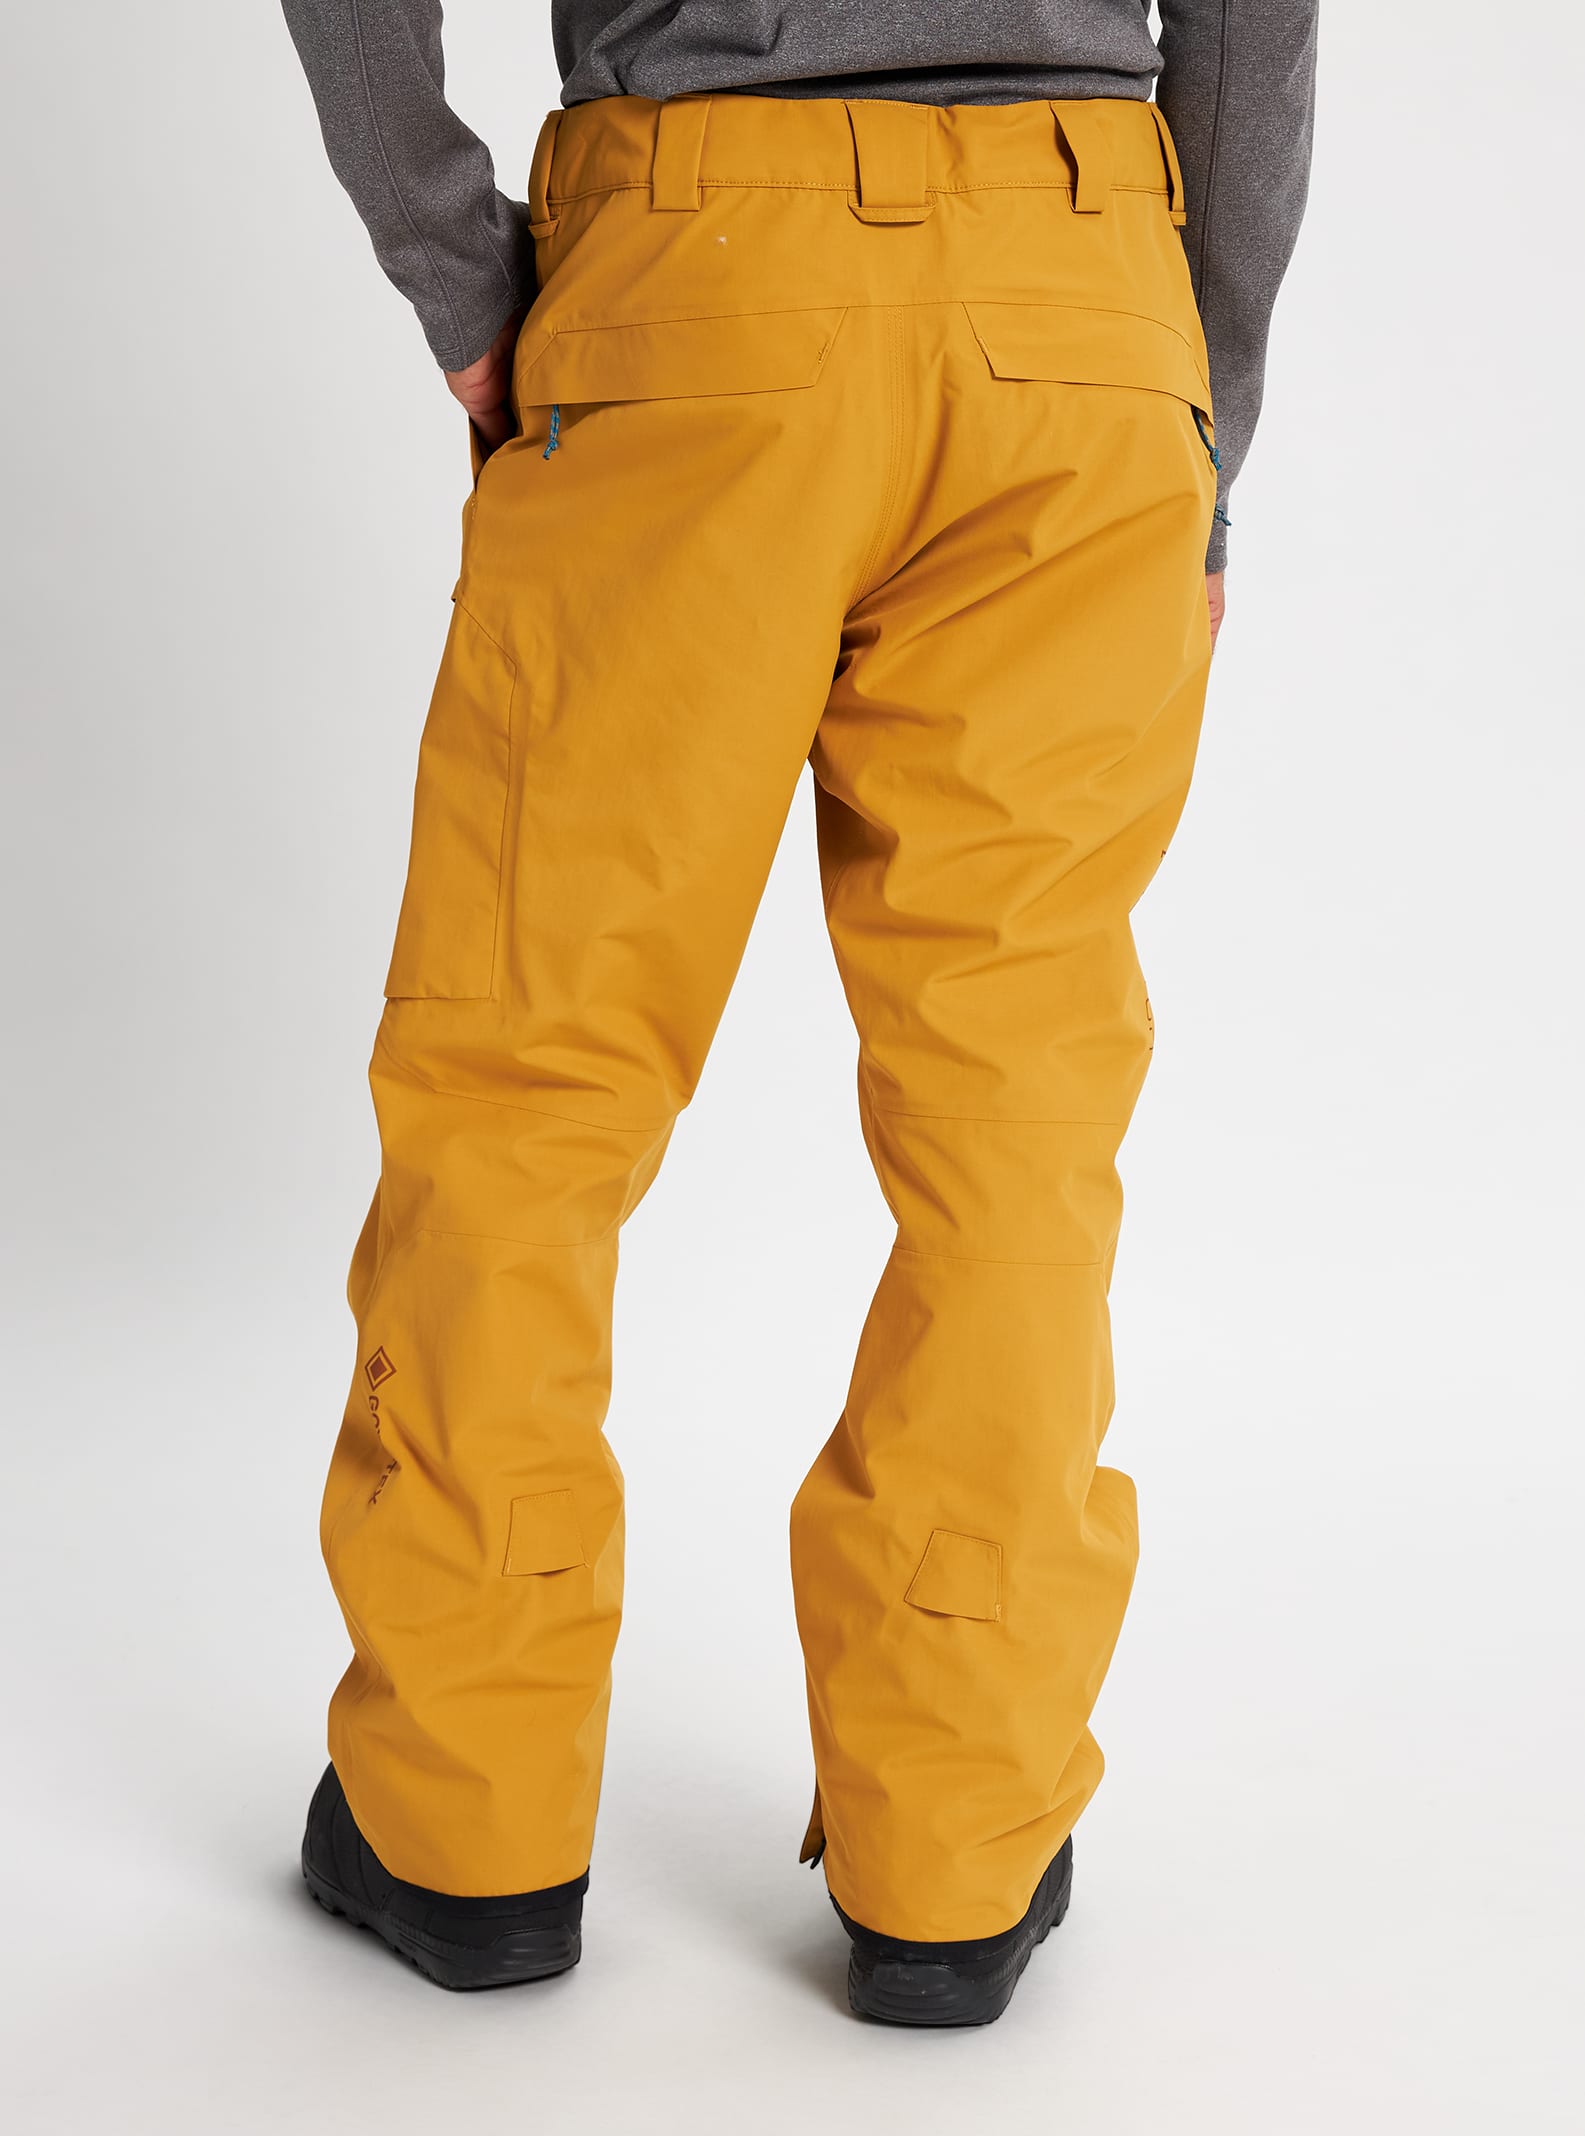 Men's & Women's [ak] Collection | Outerwear & Layering | Burton Snowboards  US